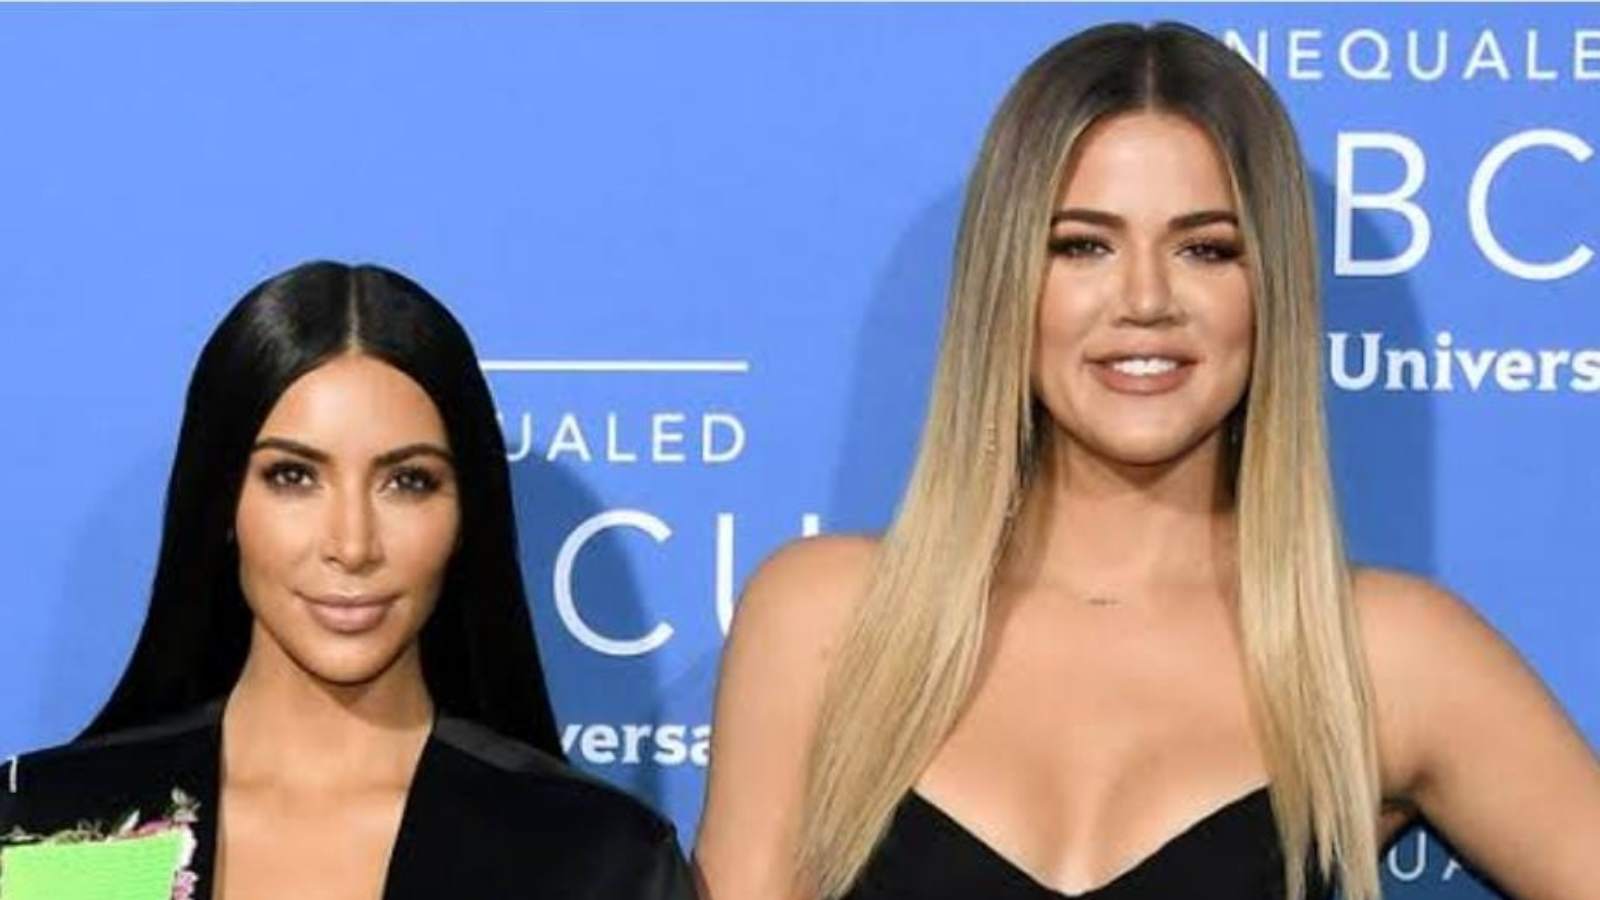 Khloé Kardashian and Kim Kardashian